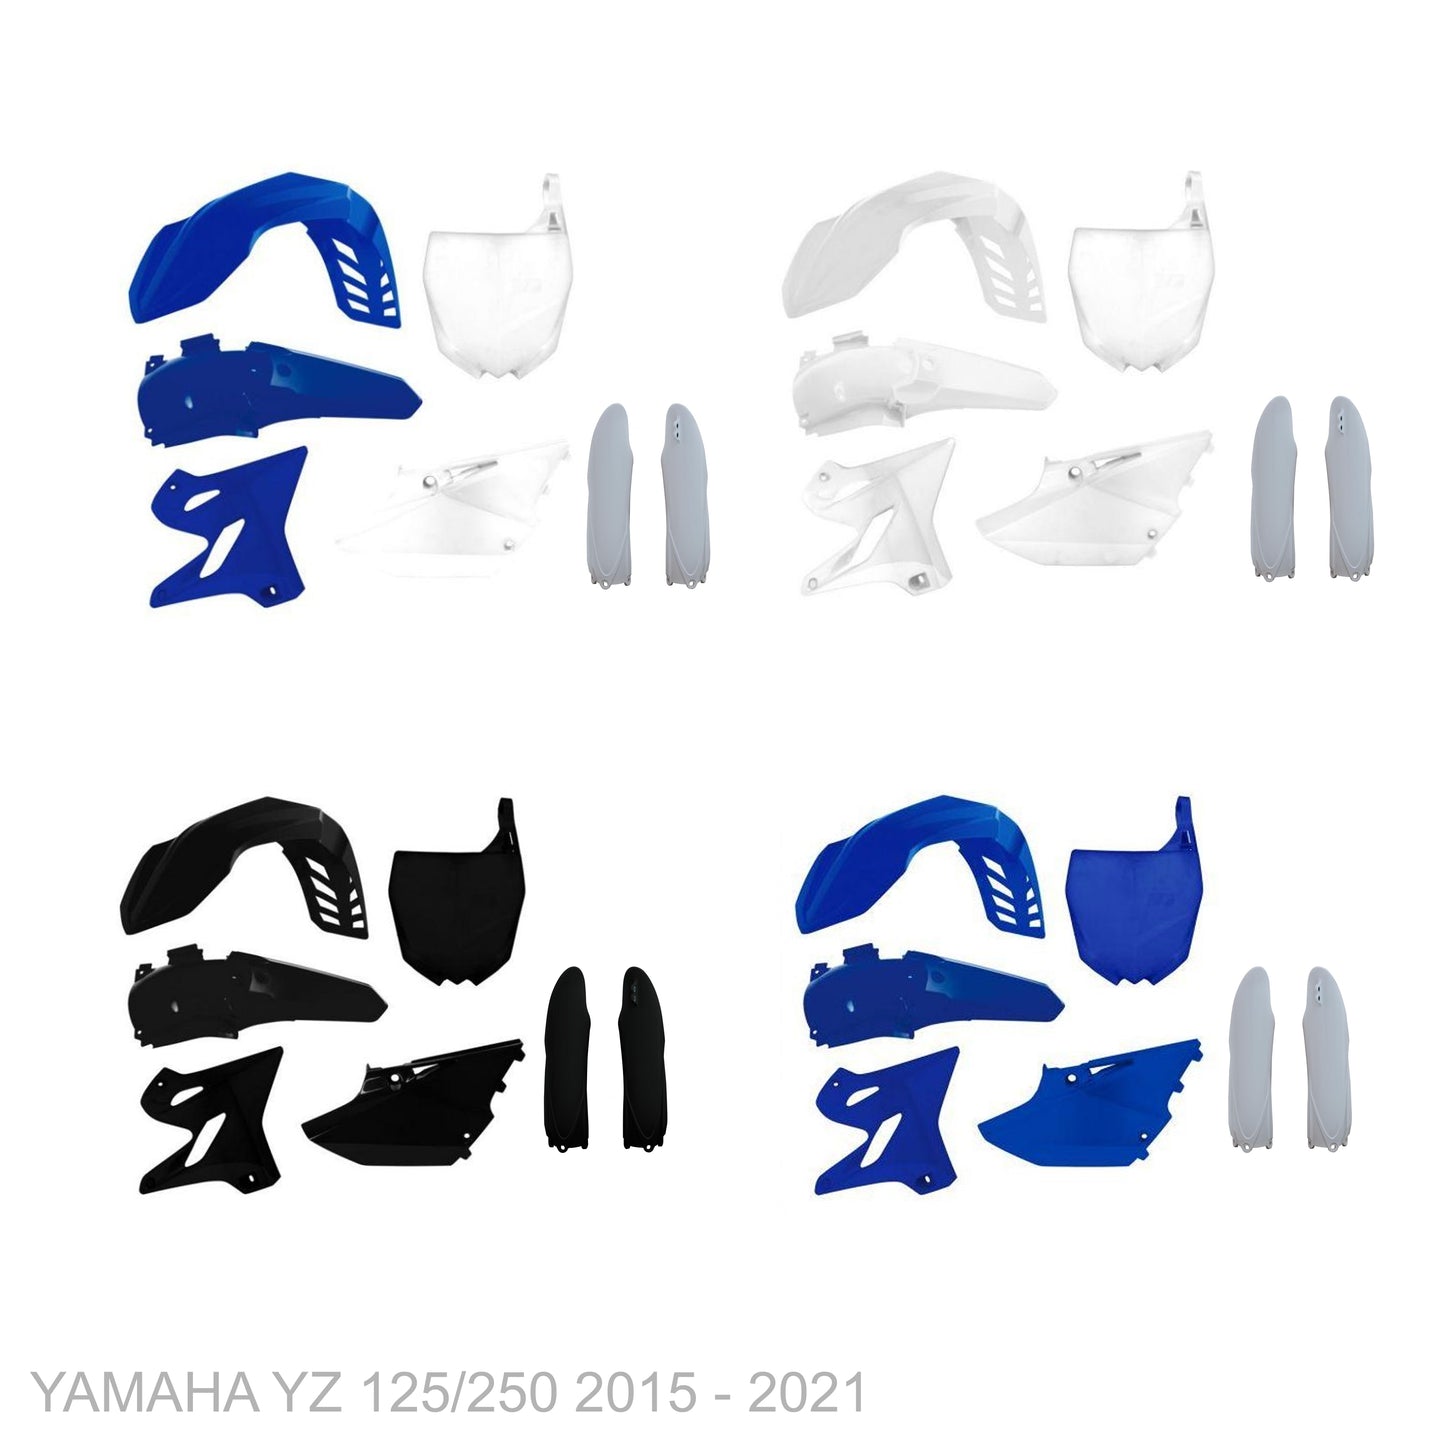 YAMAHA YZ 125/250 2015 - 2021 Retro Graphics Kit